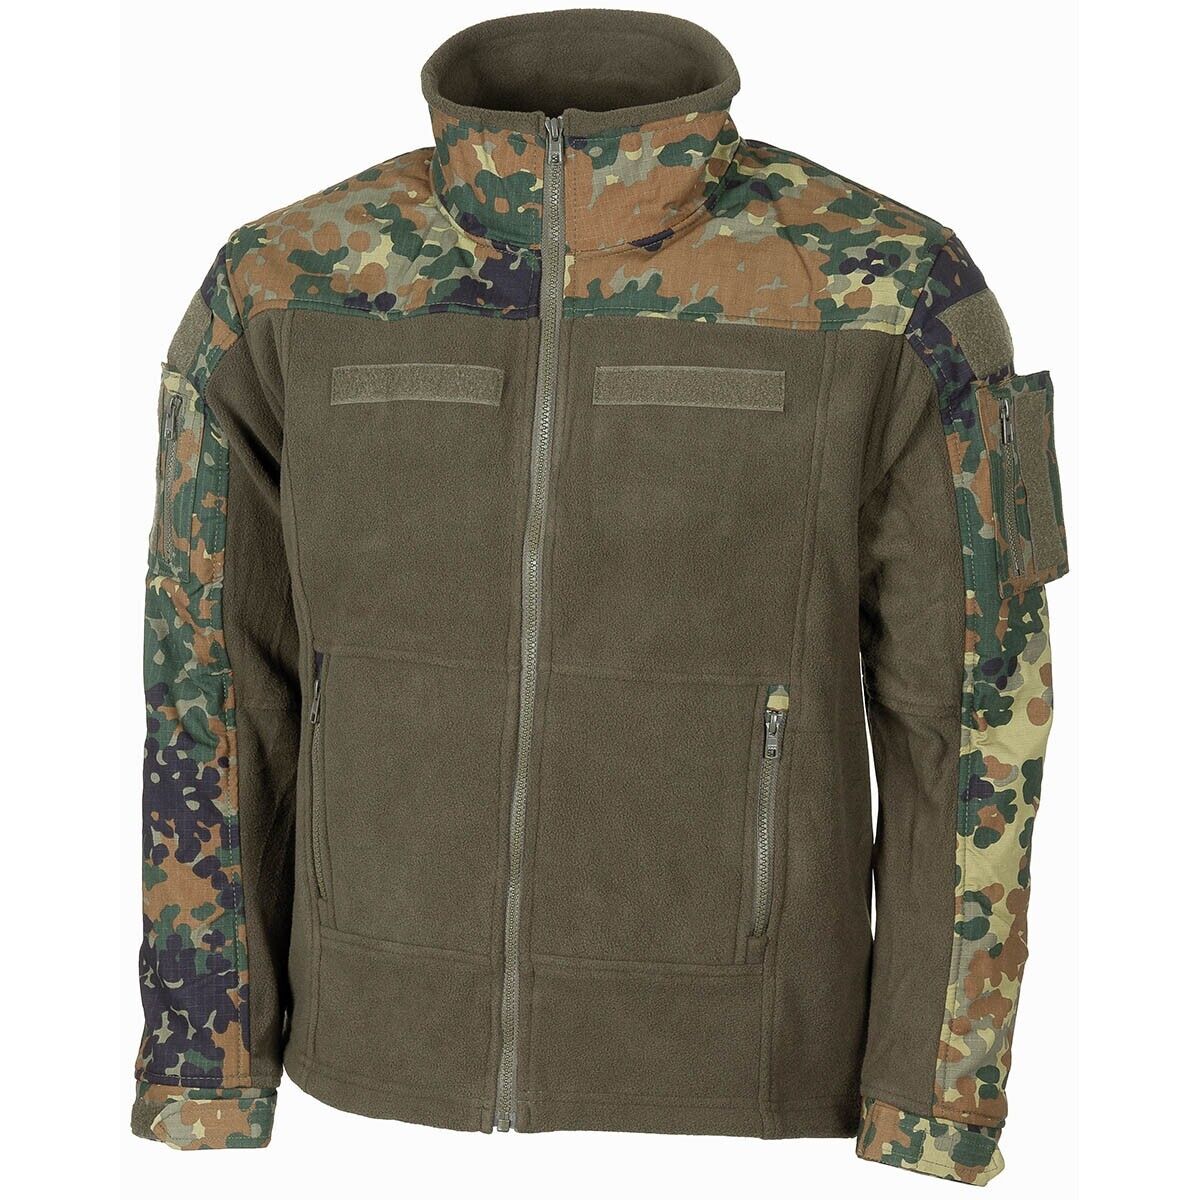 MFH Professional Fleece Jacke Combat Outdoor Fleecejacke camouflage Freizeit